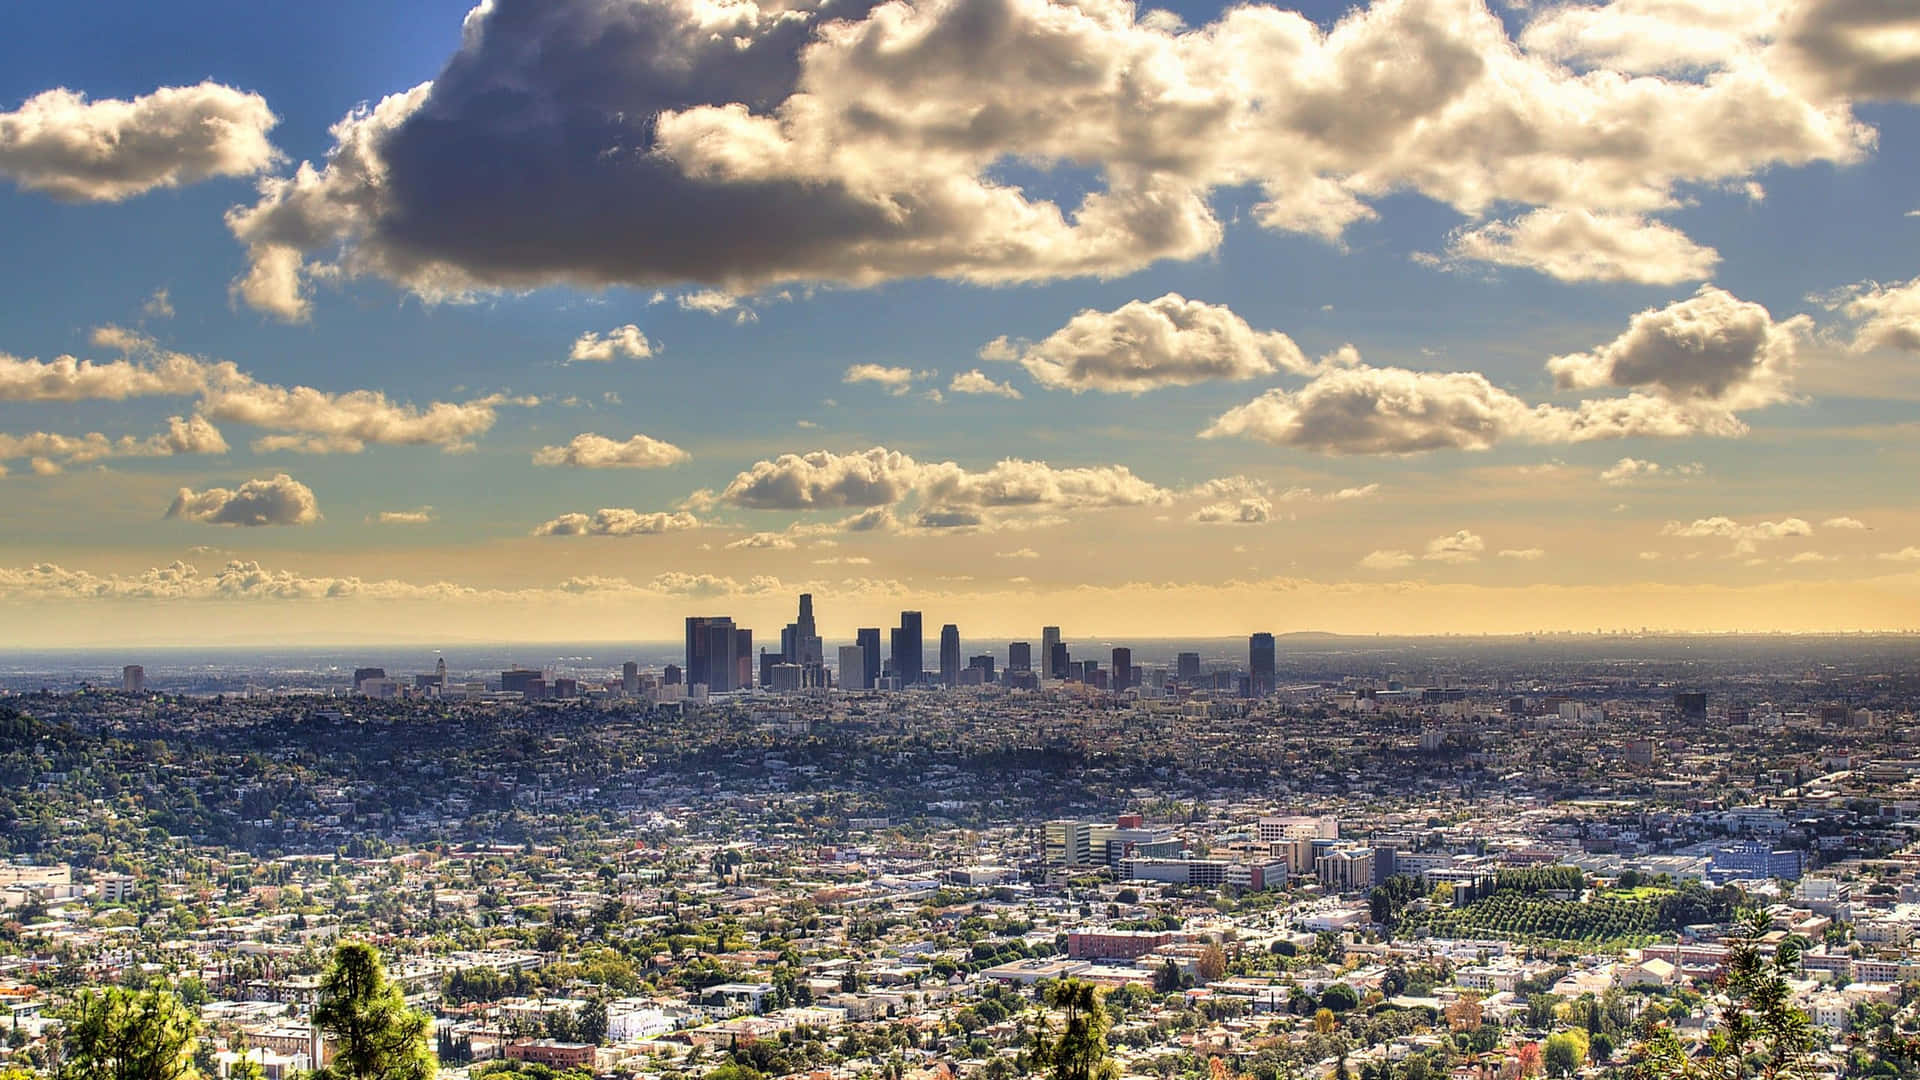 Sunset skyline of Los Angeles, California